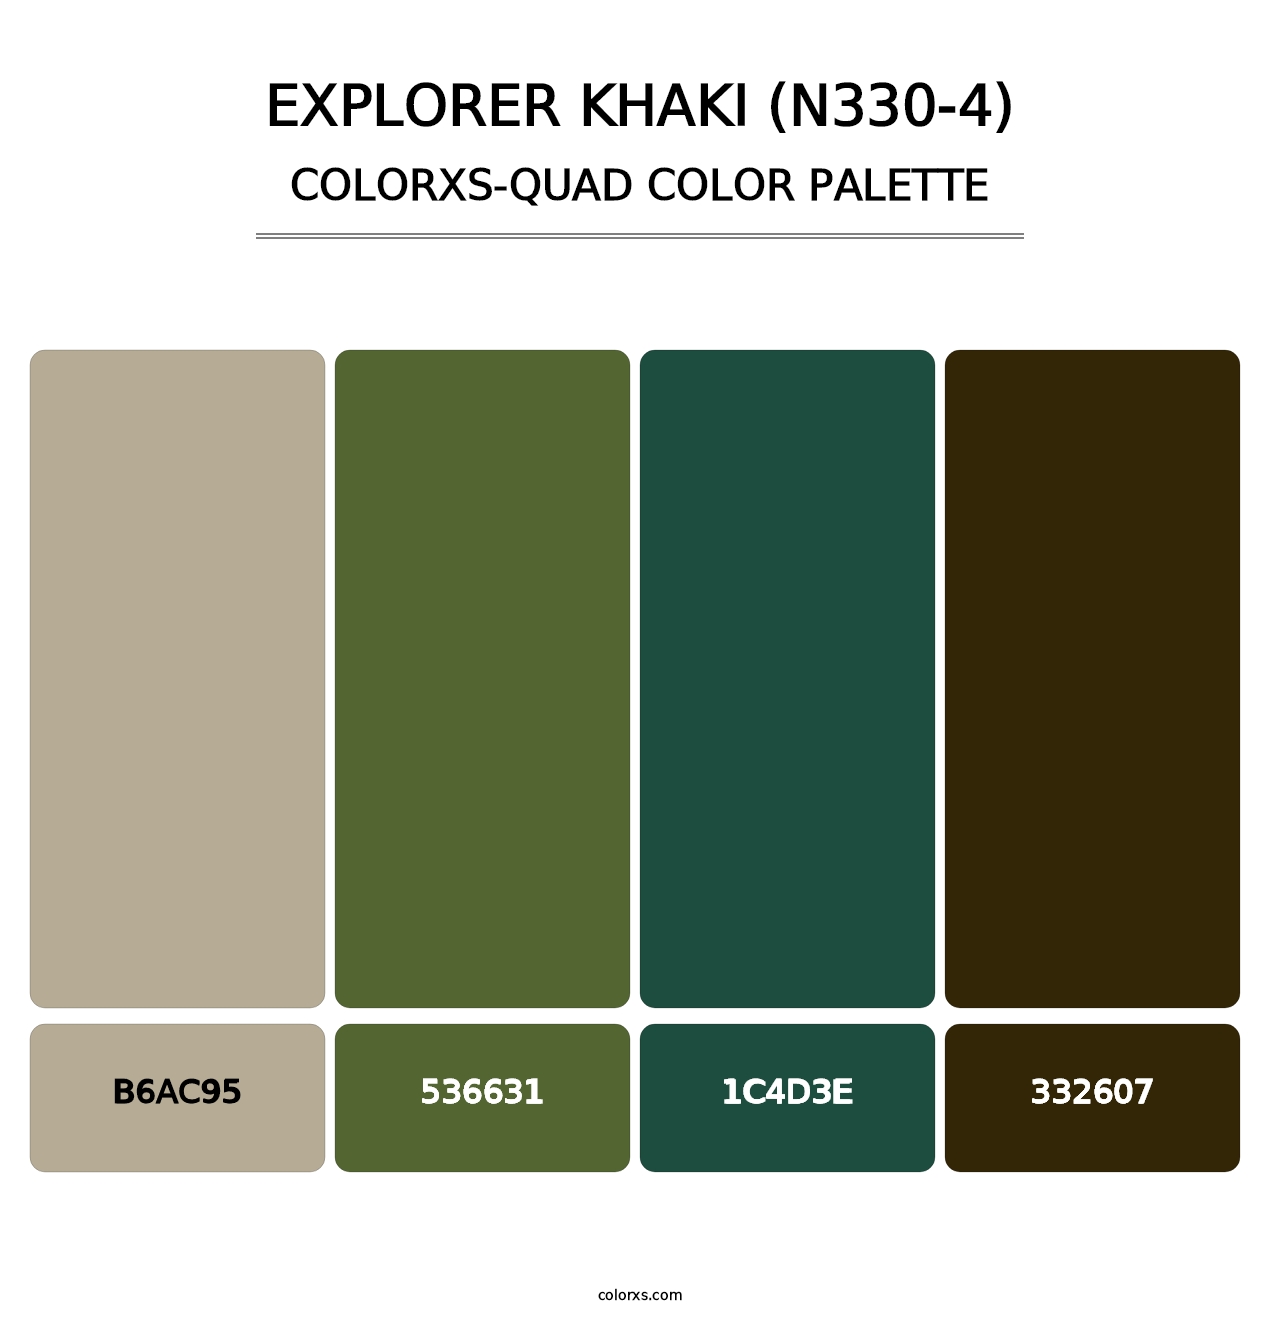 Explorer Khaki (N330-4) - Colorxs Quad Palette